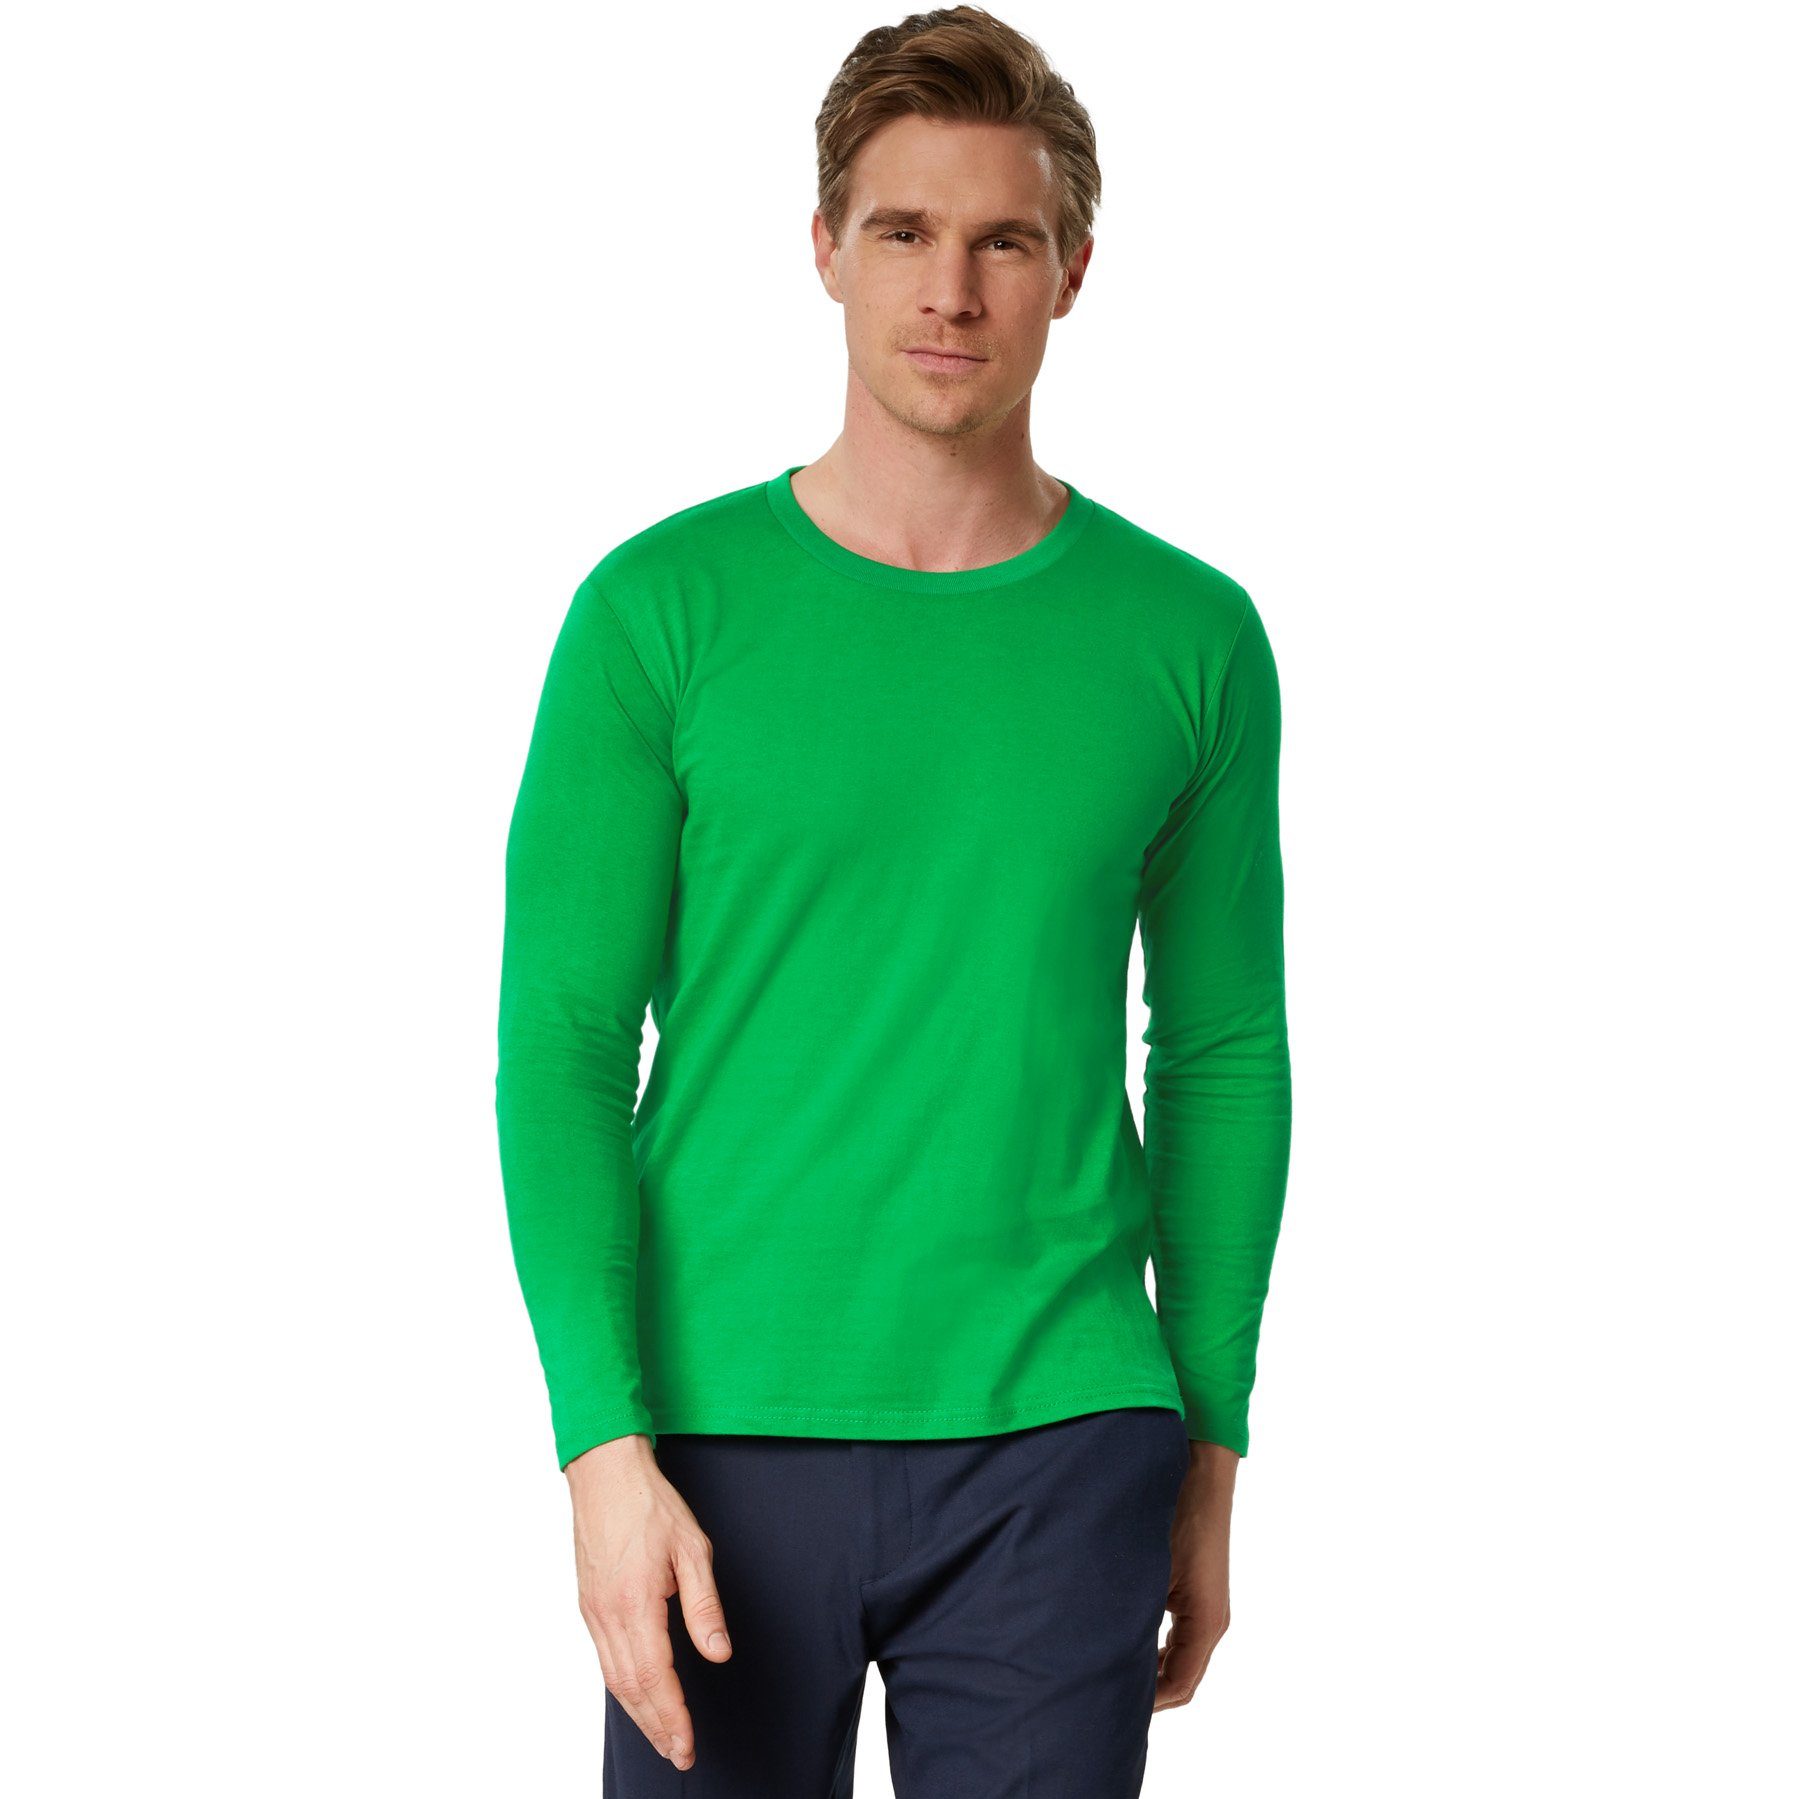 dressforfun Longsleeve Langarm-Shirt Männer Rundhals grün | Shirts